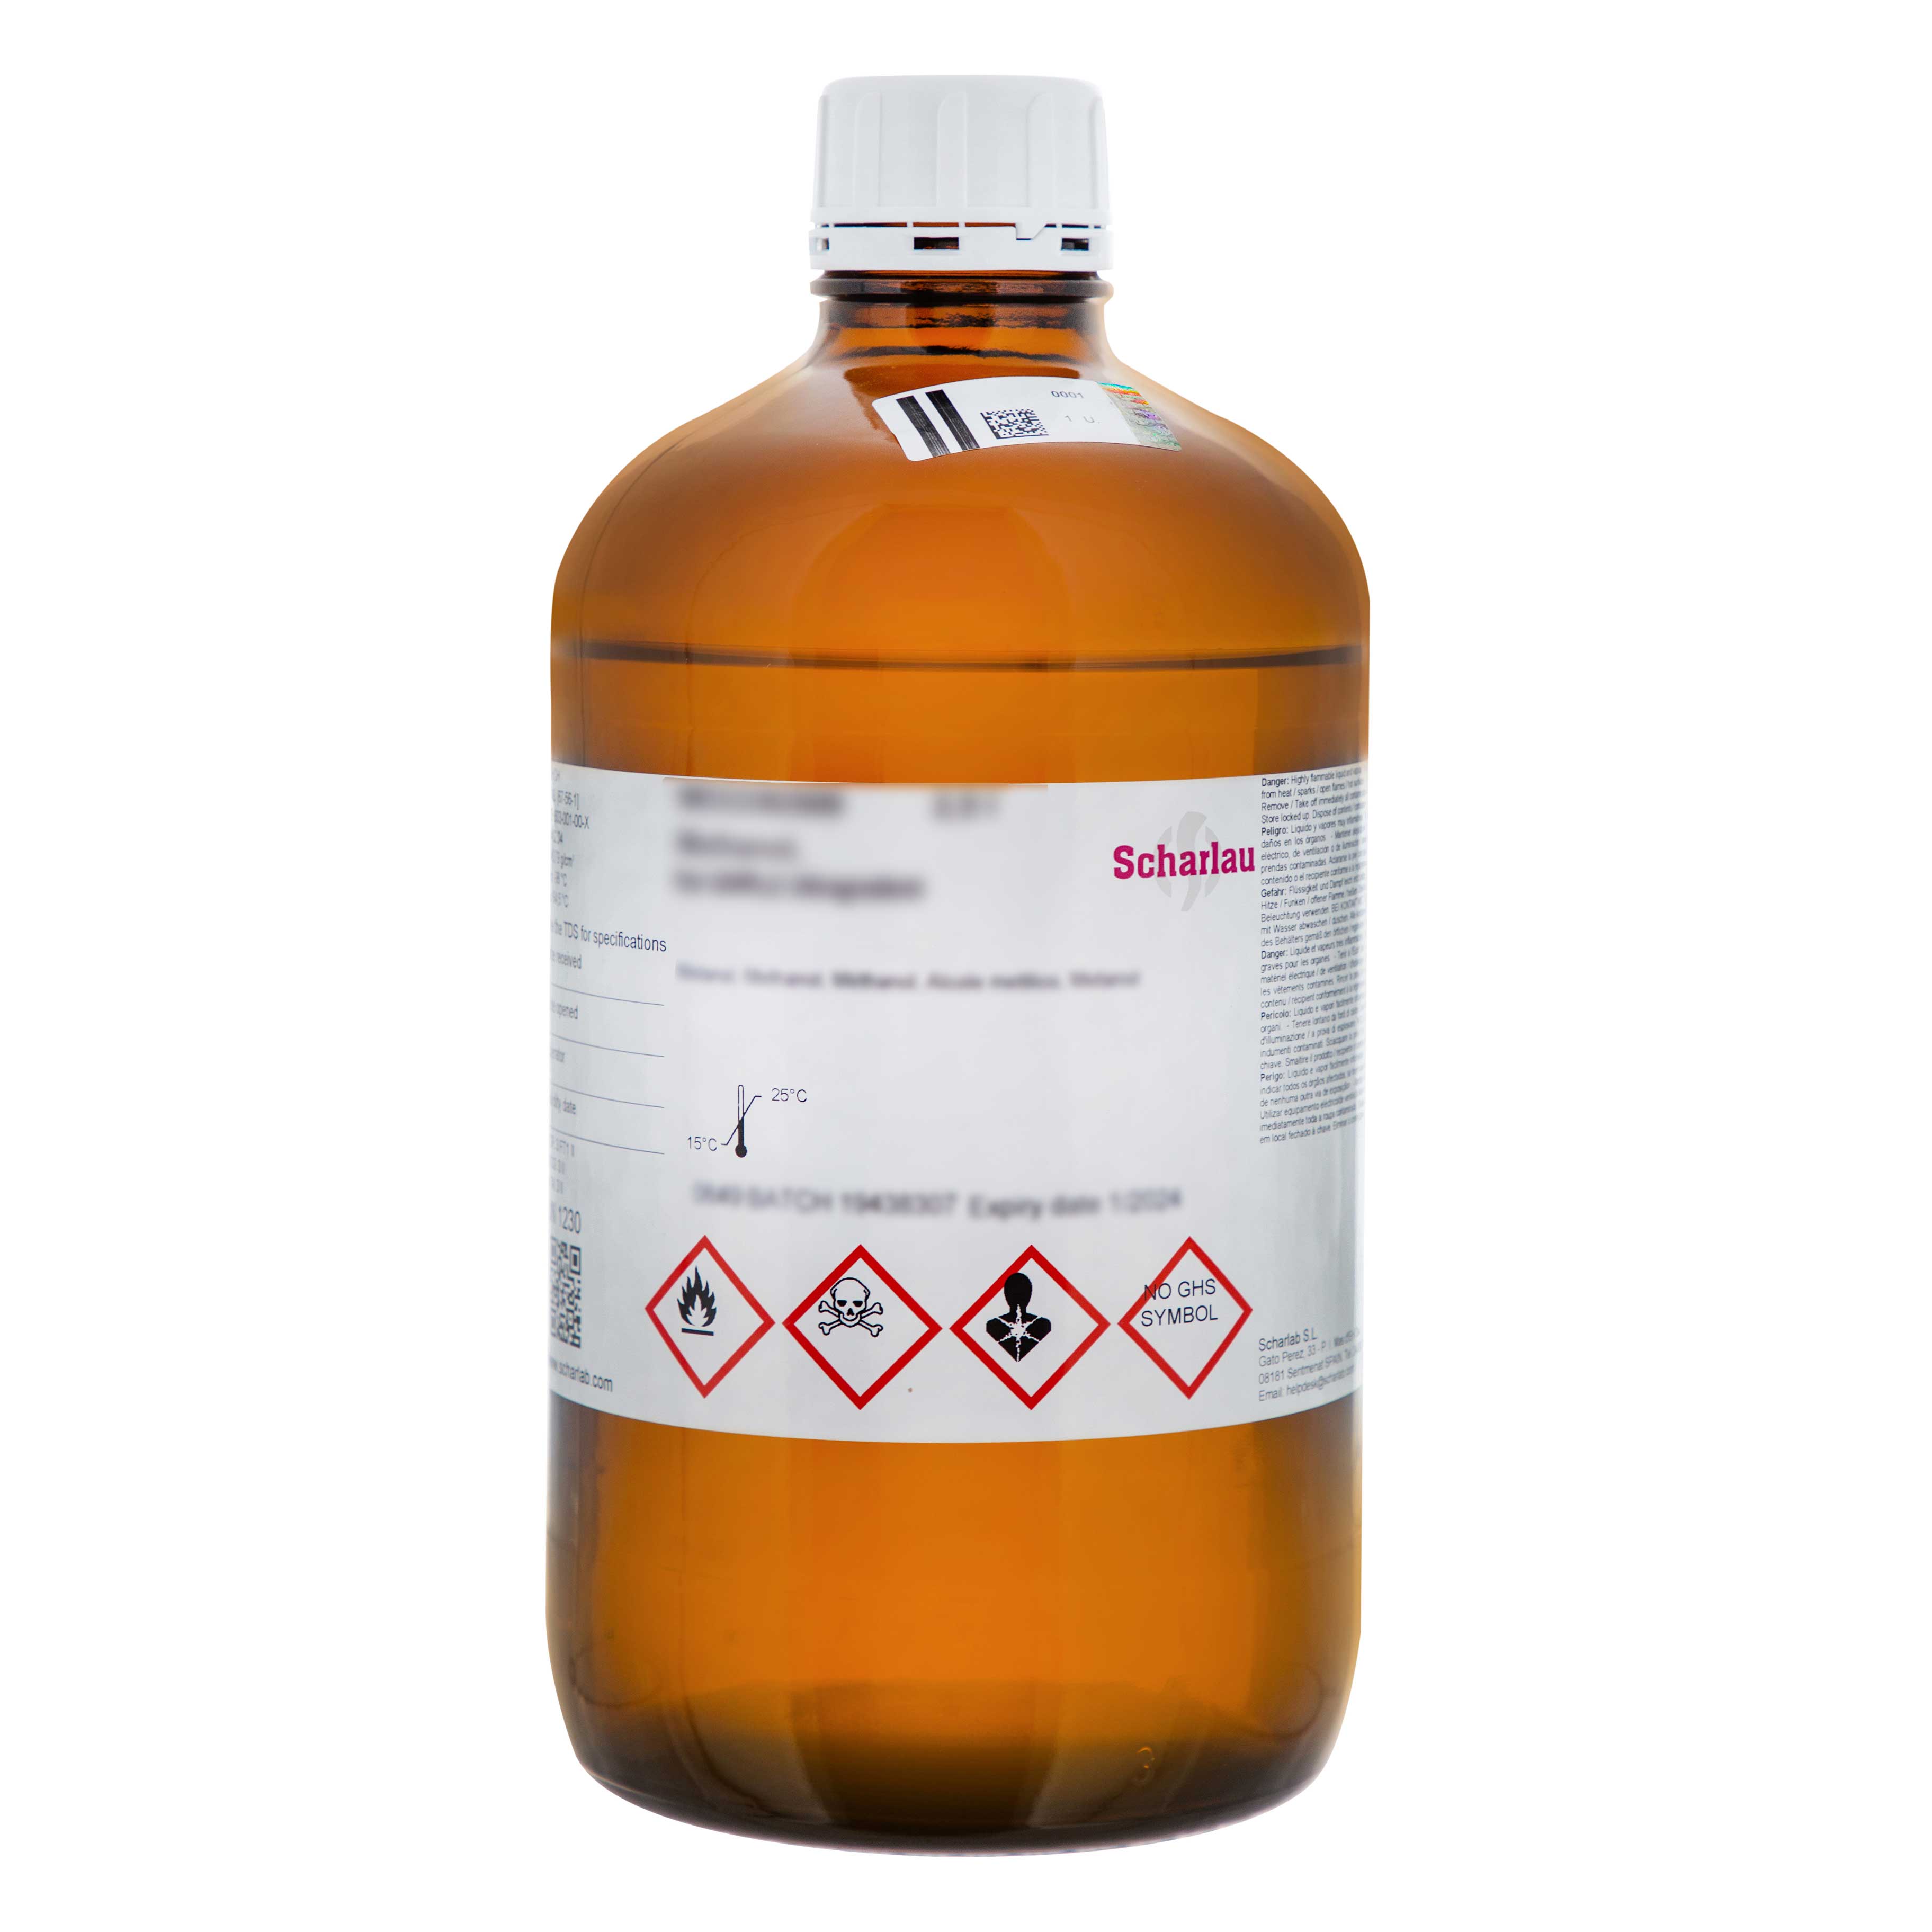 2-Methiltetrahidrofurano, estabilizado con 0,015% aprox. de 2,6-Di-terc-butil-4-metilfenol (BHT)